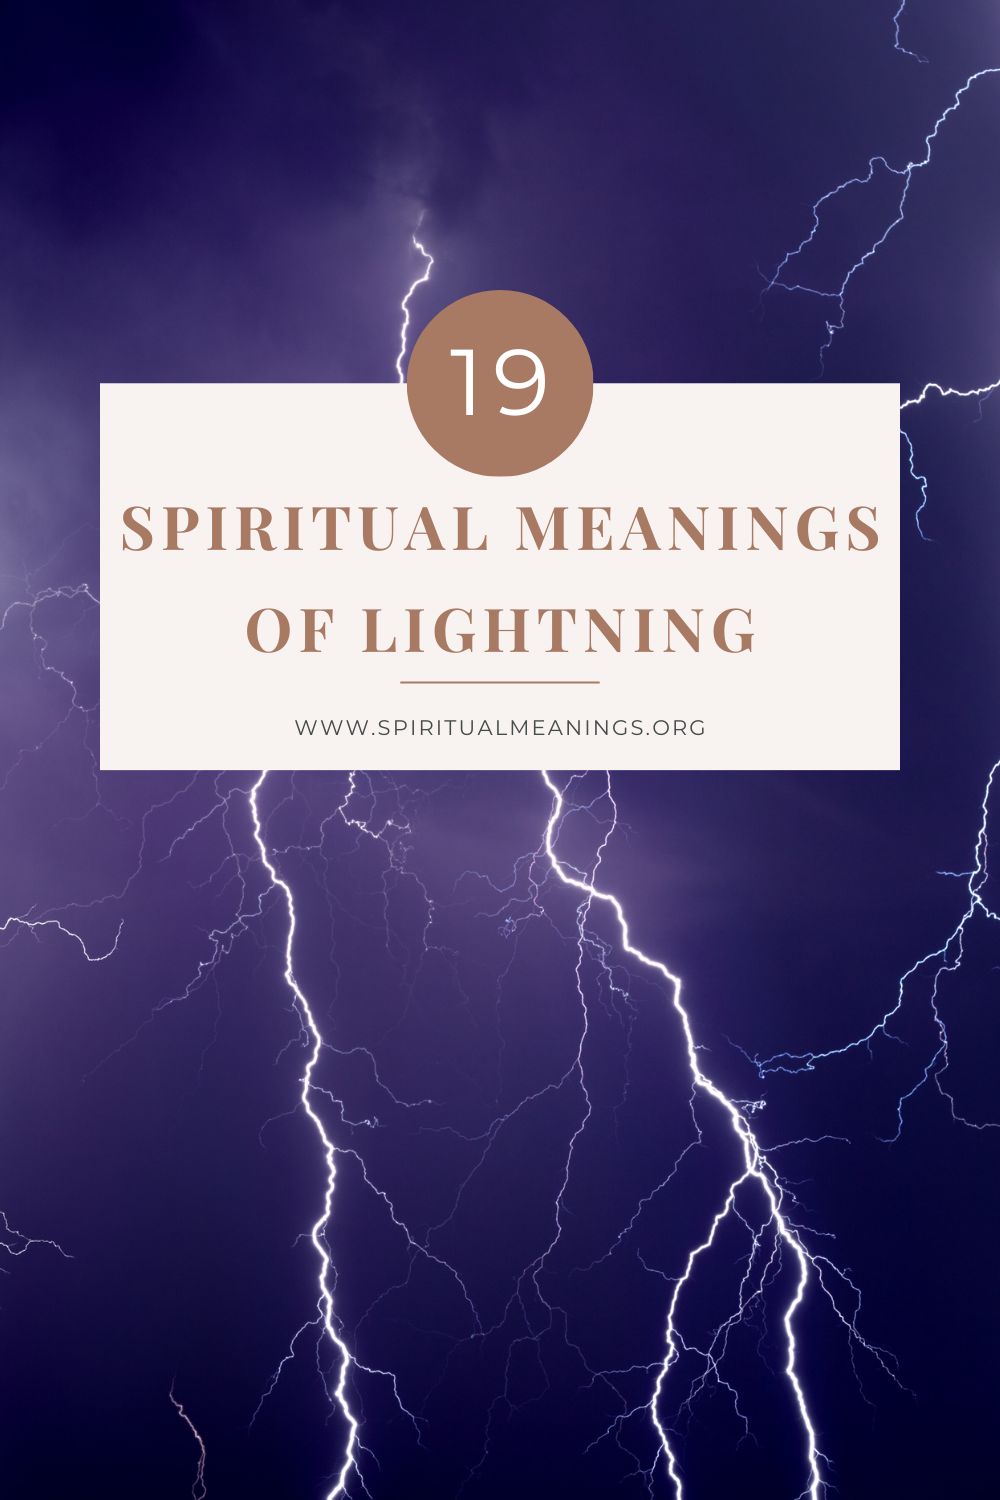 Spiritual Meanings Of Lightning